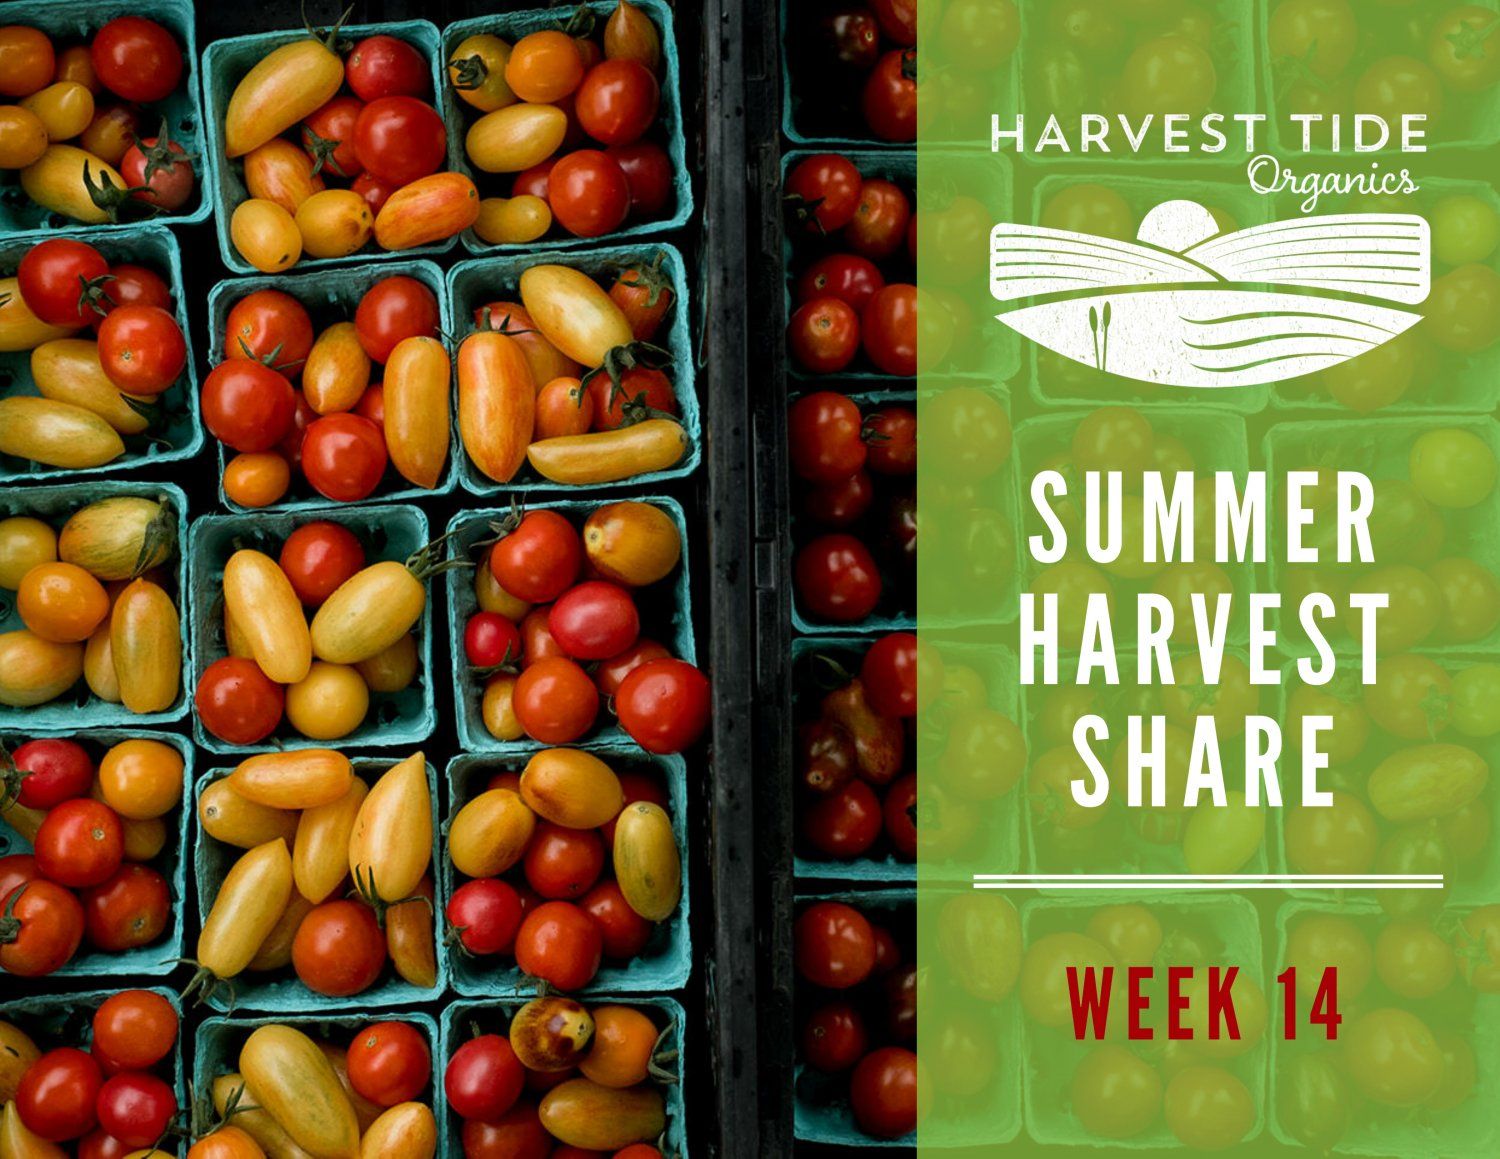 Previous Happening: Summer Harvest Share - Week 14